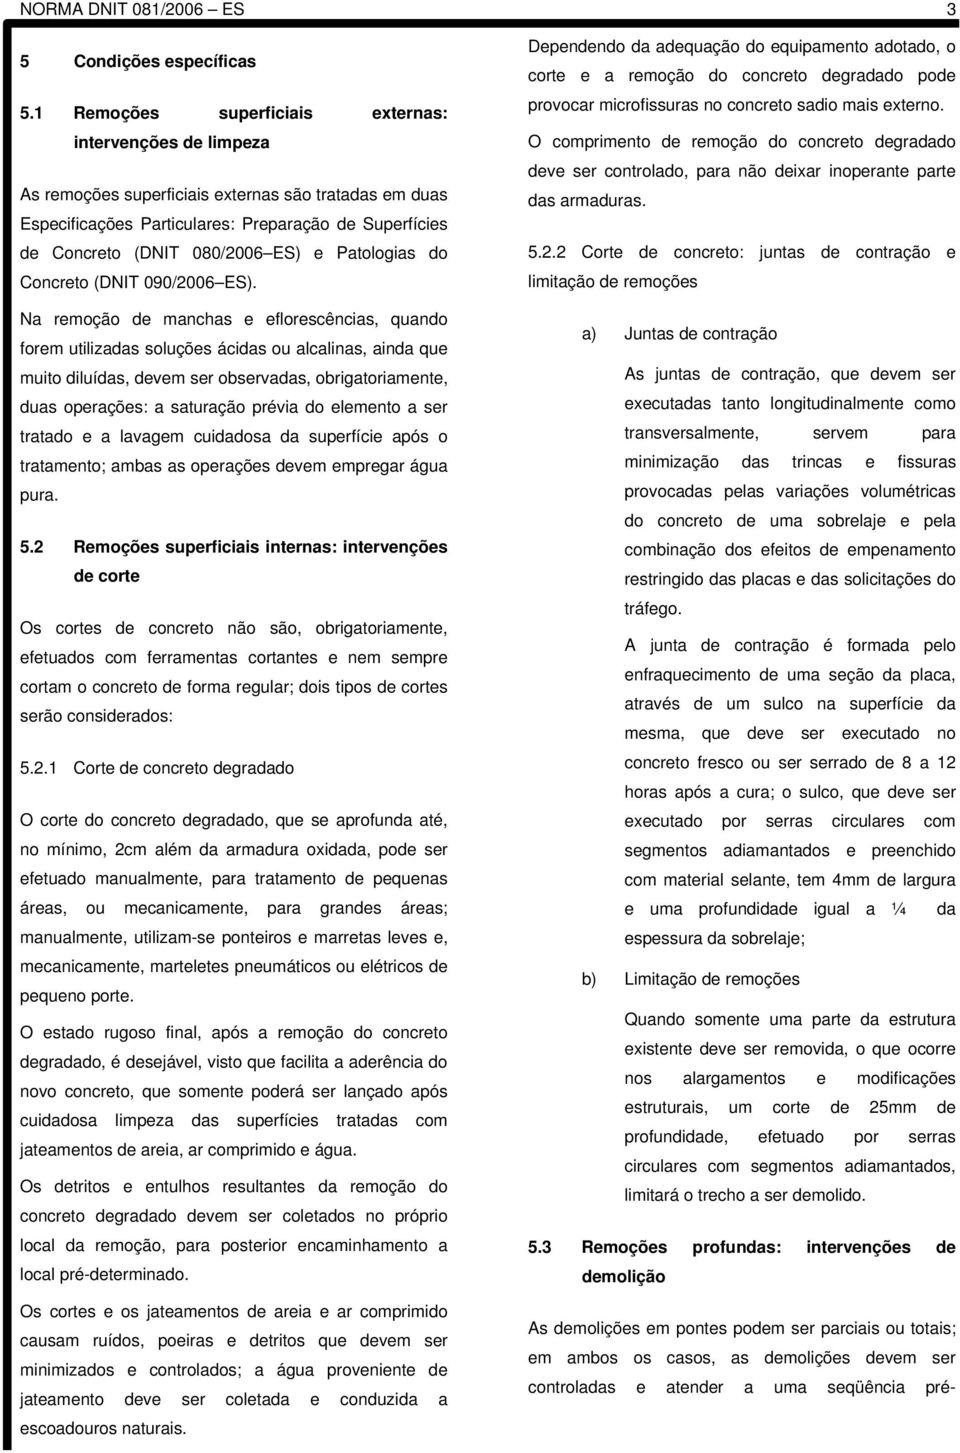 e Patologias do Concreto (DNIT 090/2006 ES).